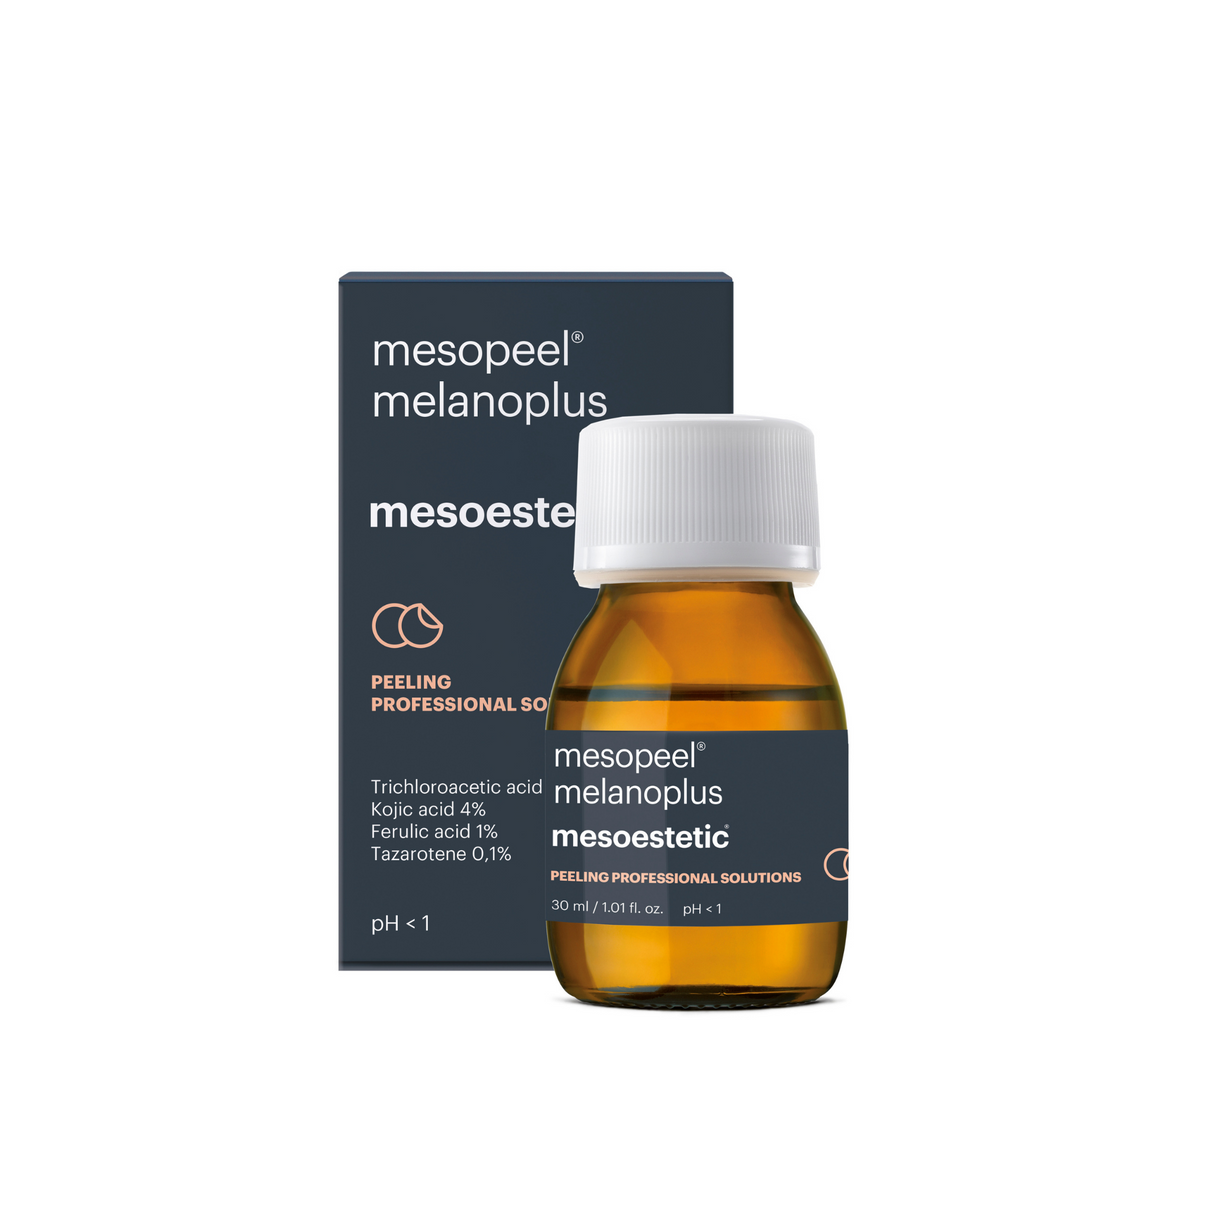 mesopeel melanoplus | peeling with 20% TCA | 30 ml